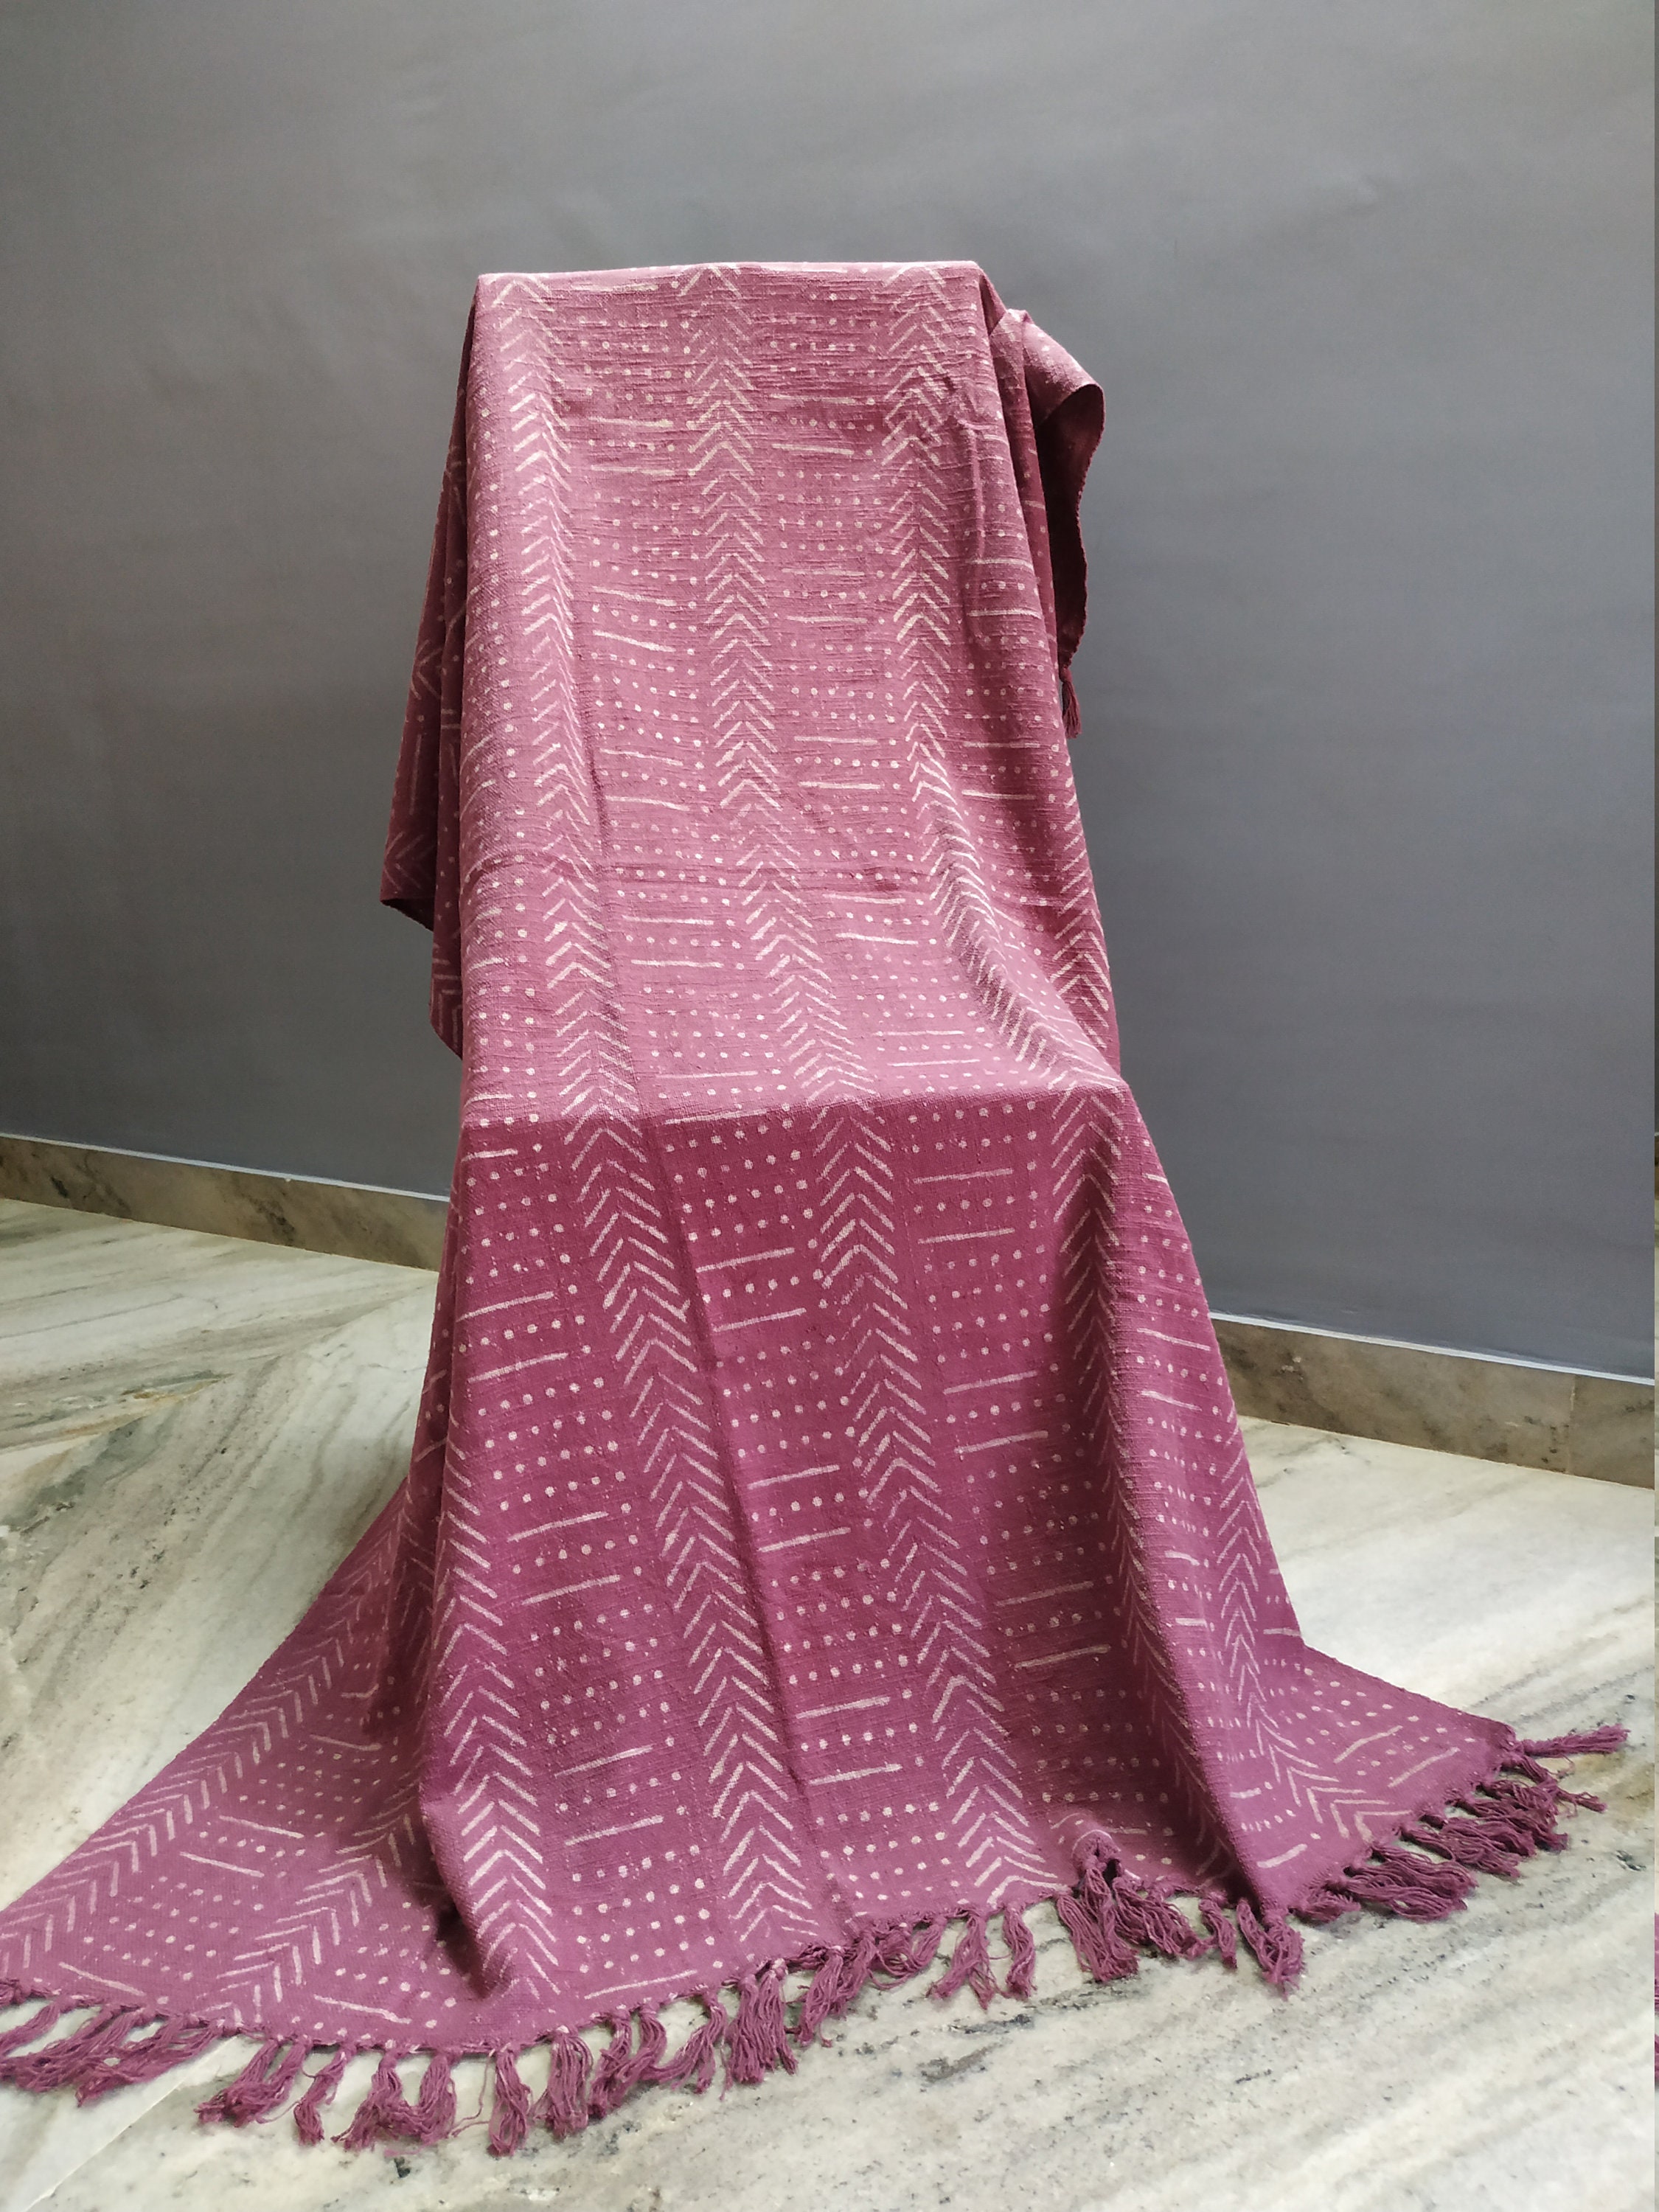 Handloom Mudcloth Blanket / Cotton Fringed Blankets / Throw | Etsy